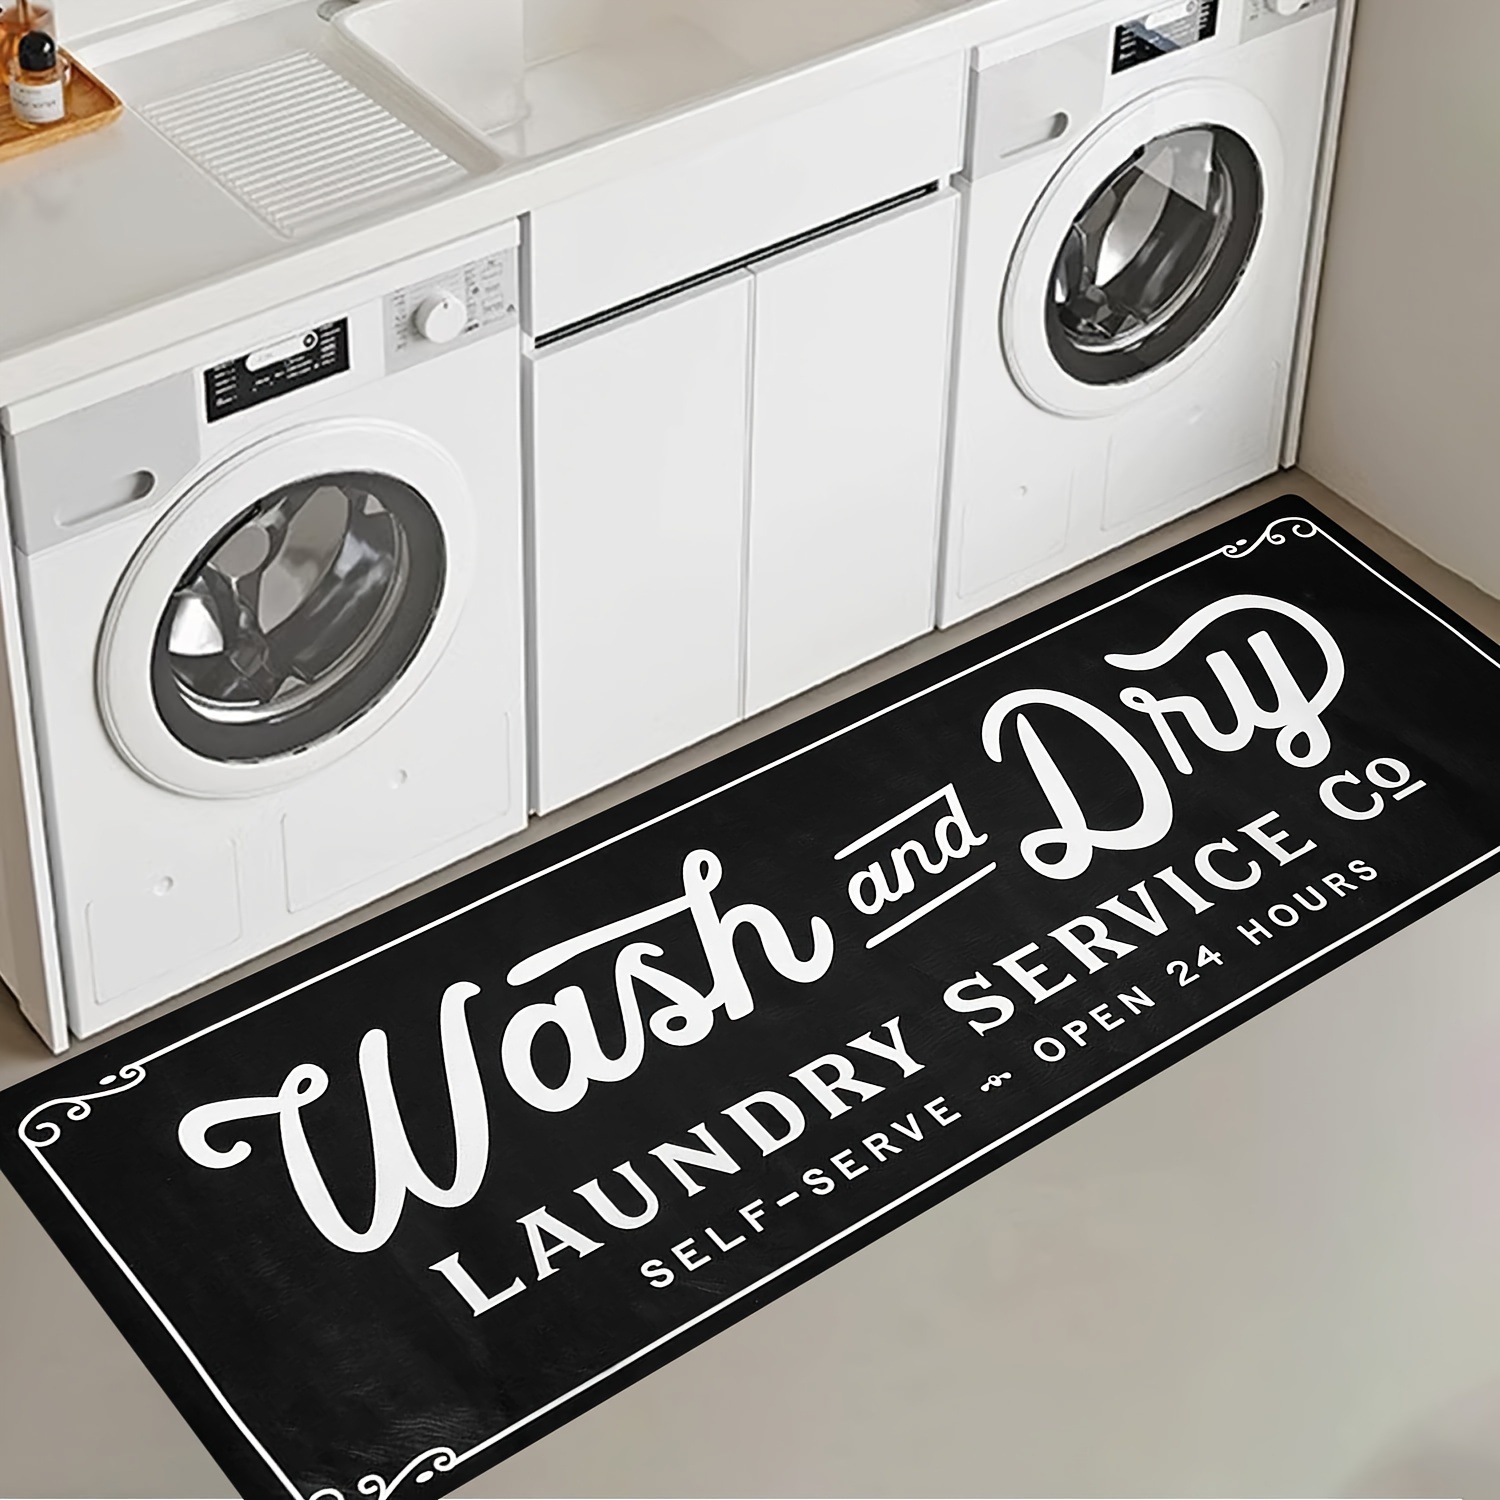 

1pc Laundry Service Co Decorative Carpet, Black English Machine Washable Mat, Soft And Comfortable - Perfect For Laundry Room, Corridor, Entrance, Kitchen Decoration